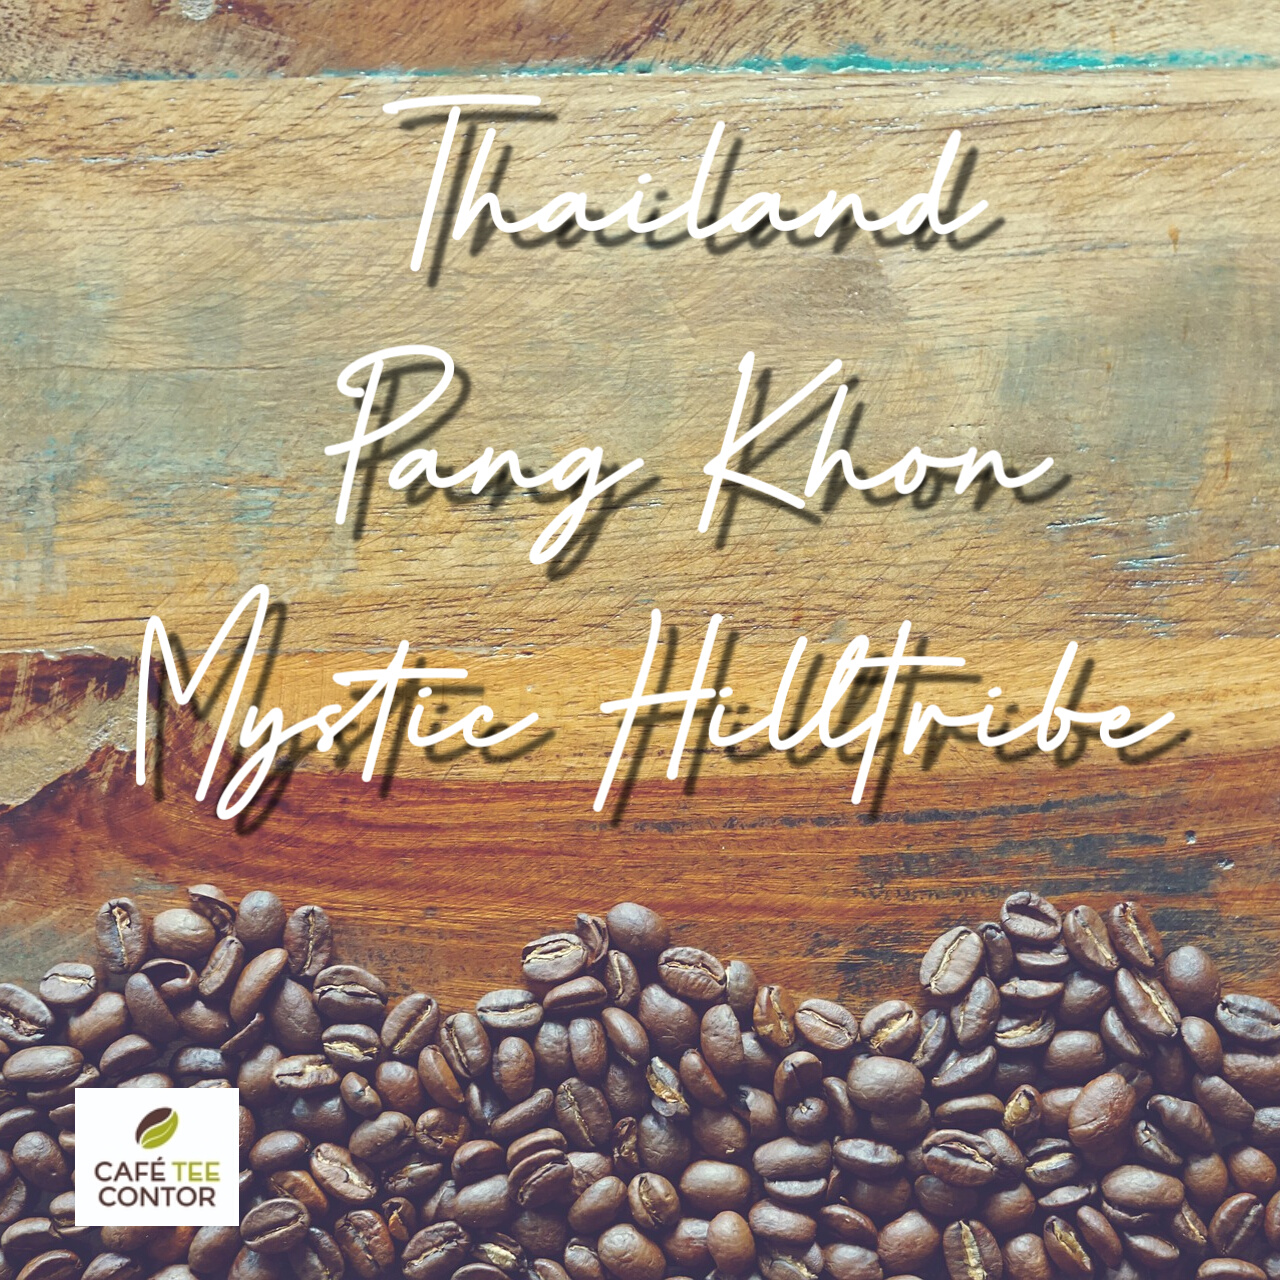 Kaffee Thailand Pang Khon Mystic Hilltribe